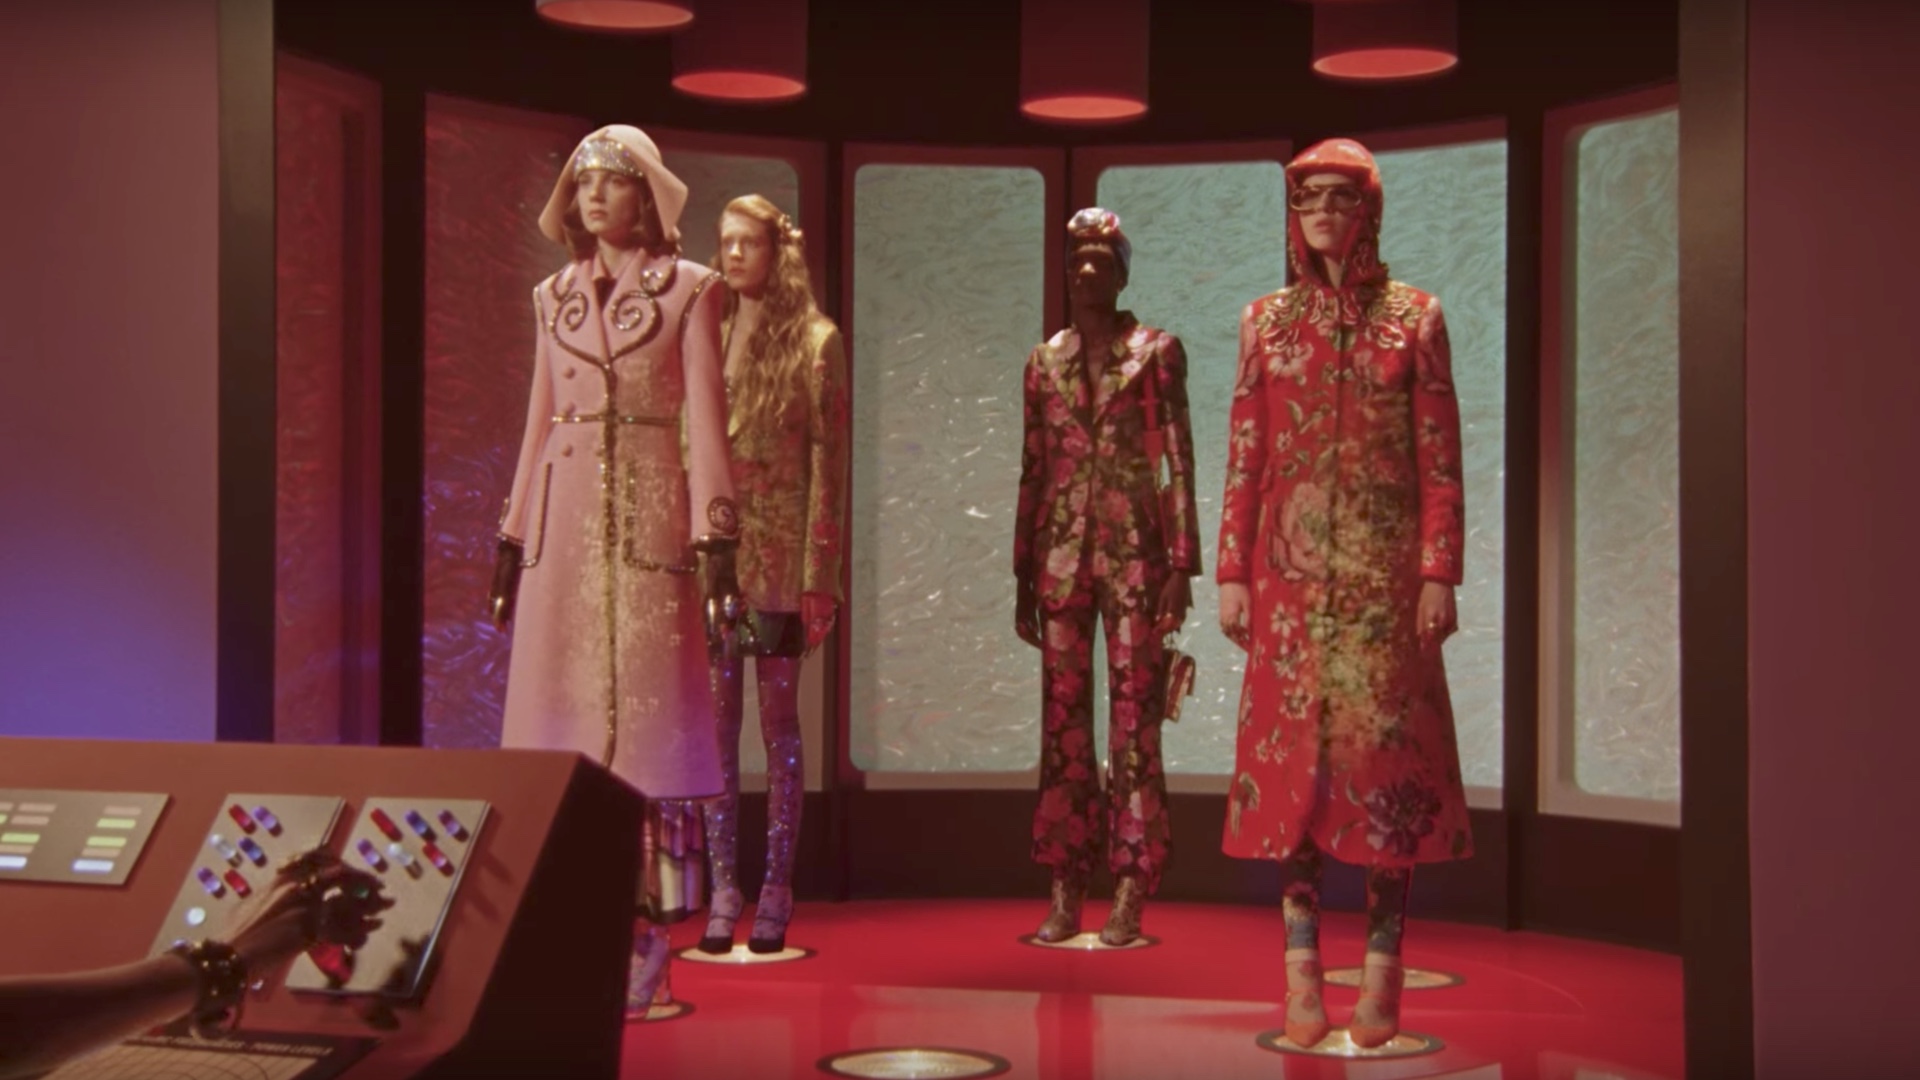 Fun Retro 1960s Sci-Fi Themed Promo For Gucci's STAR TREK Inspired Clothing  Line — GeekTyrant